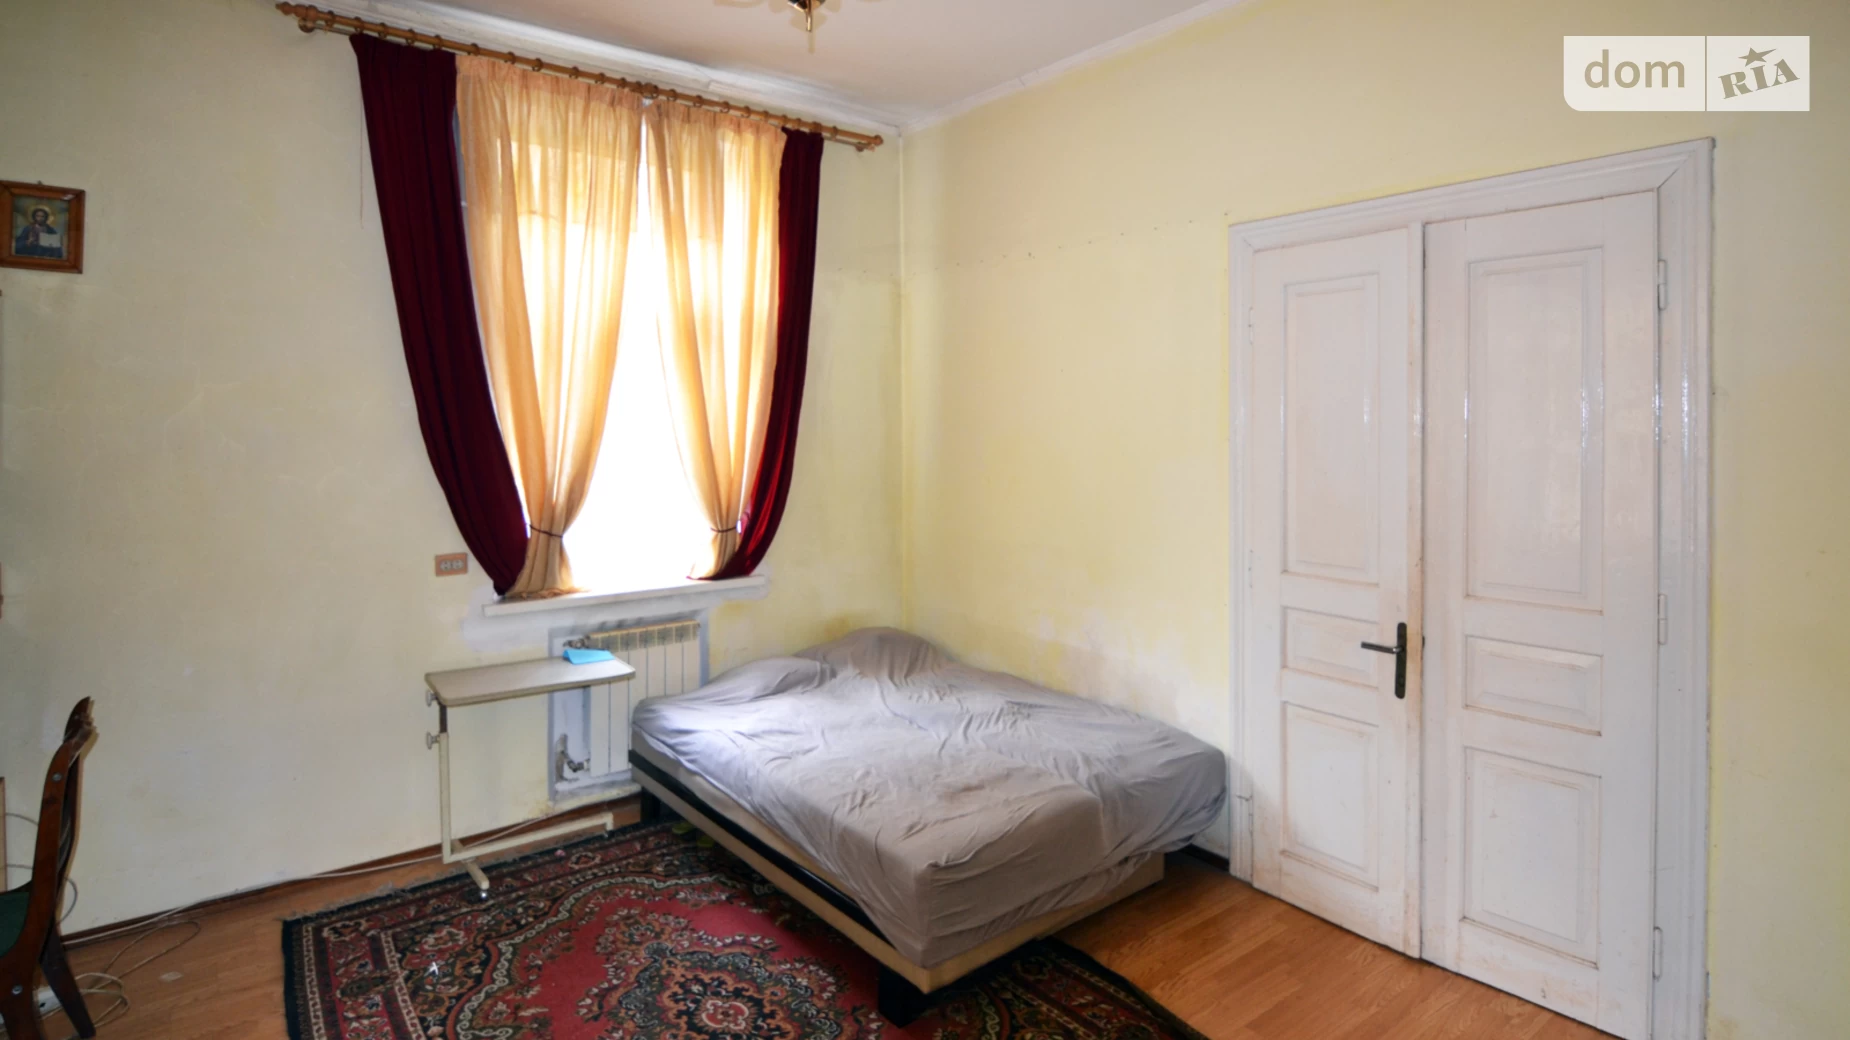 Продается 2-комнатная квартира 59.4 кв. м в Ивано-Франковске - фото 3